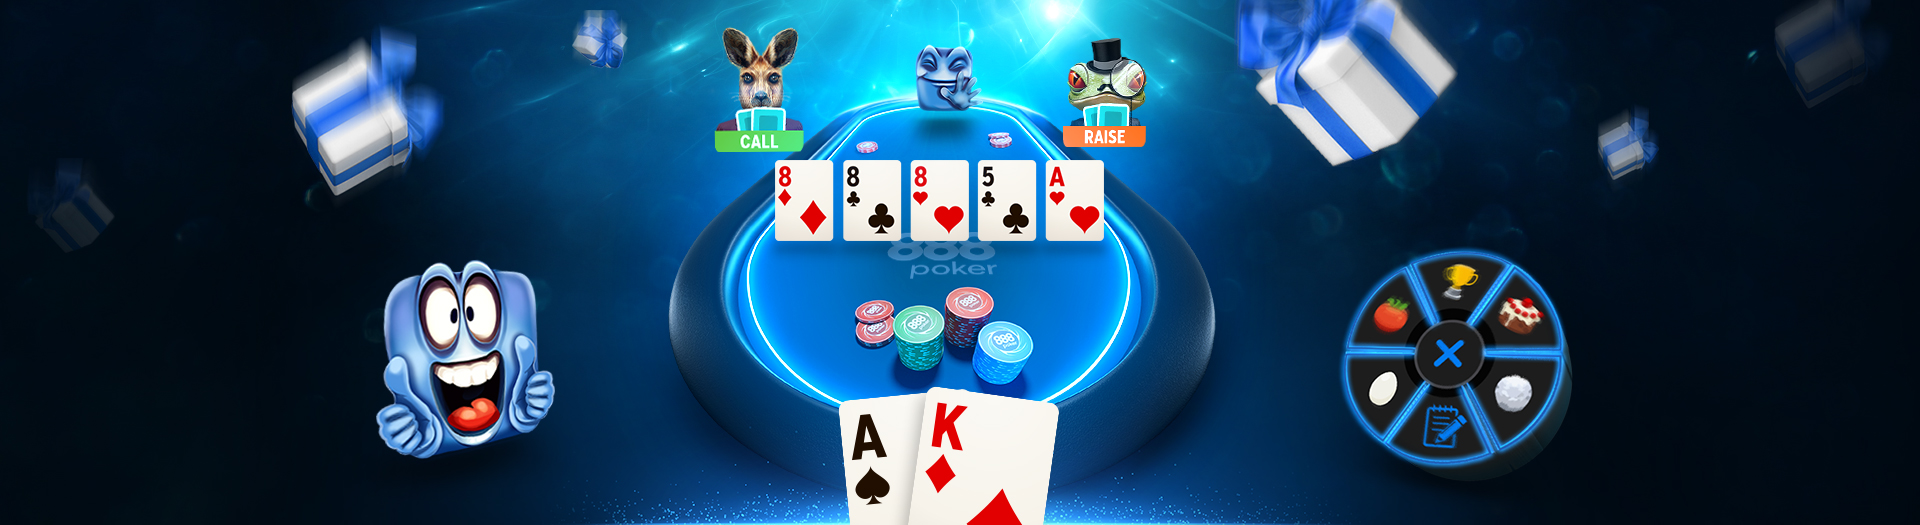 TS-43644-Poker-8-Launch-LP-image-1600767511450_tcm1488-497727-1617005977542_tcm2000-514833